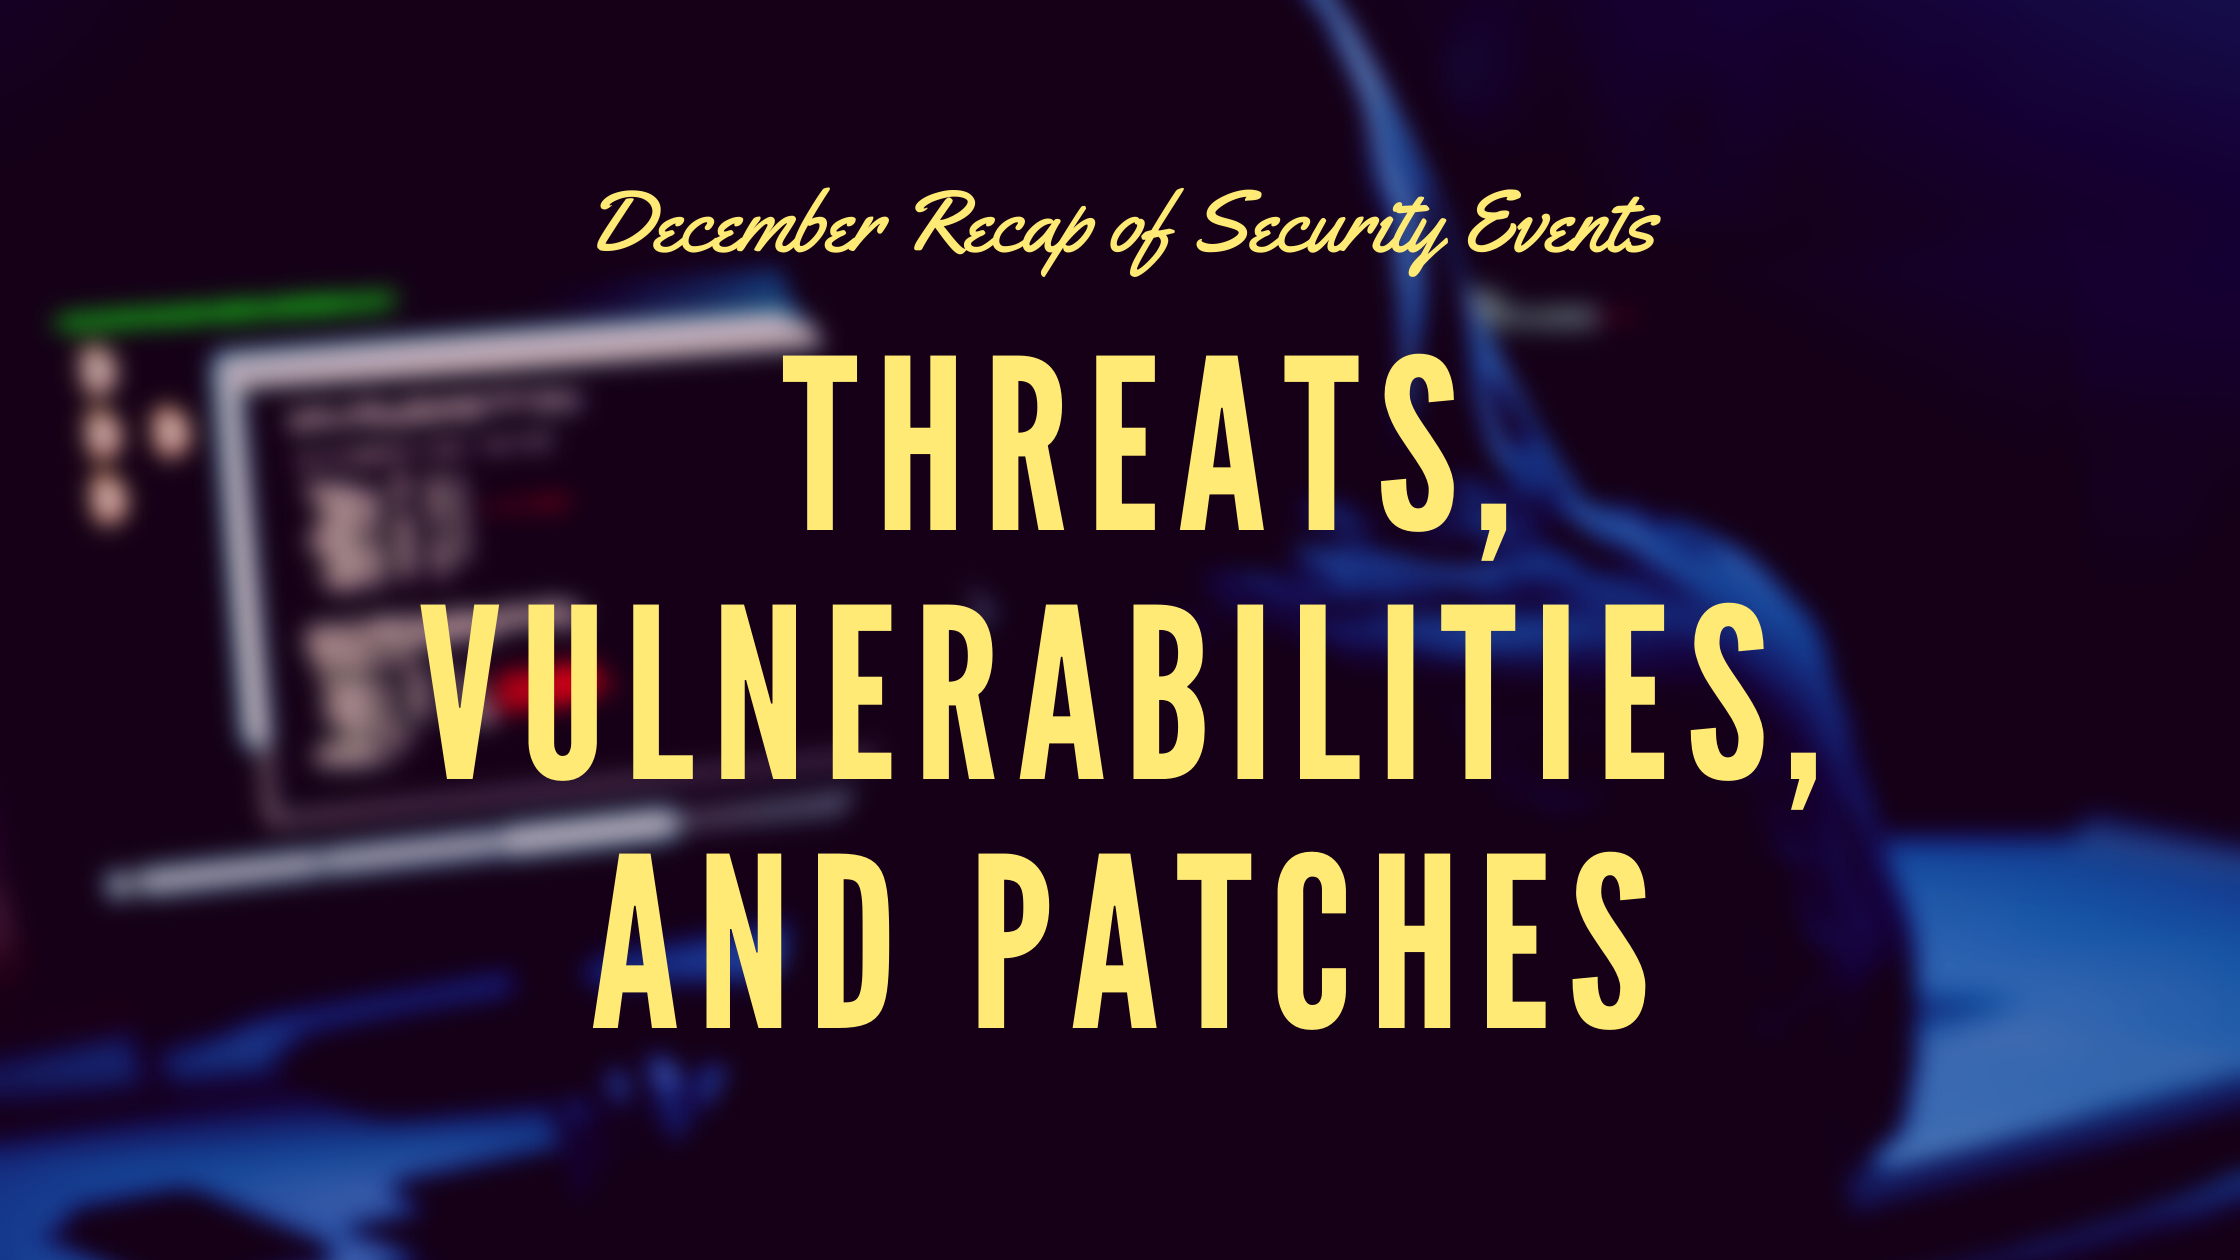 [Security Tip] December Security Threats Summarized